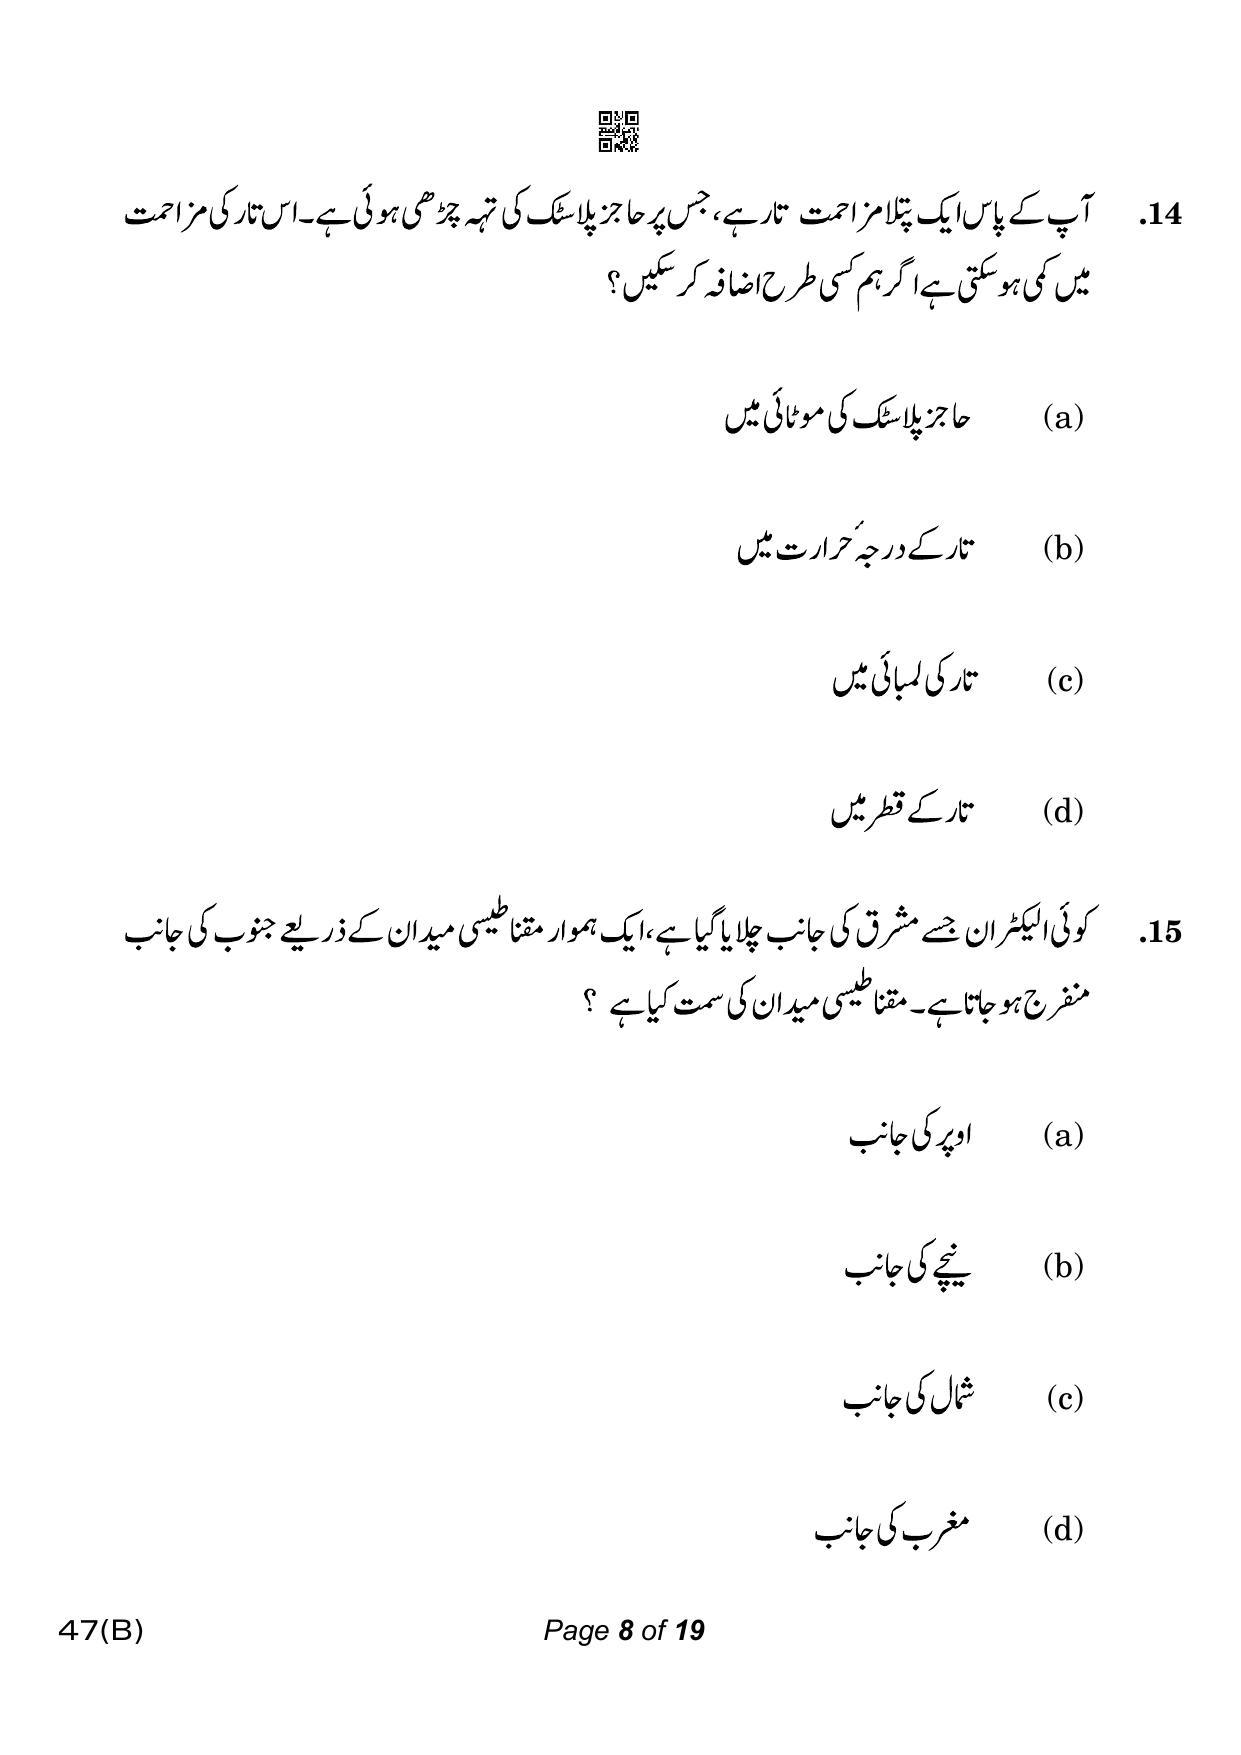 CBSE Class 10 47-B-5 Science for VI Urdu Version 2023 Question Paper - Page 8